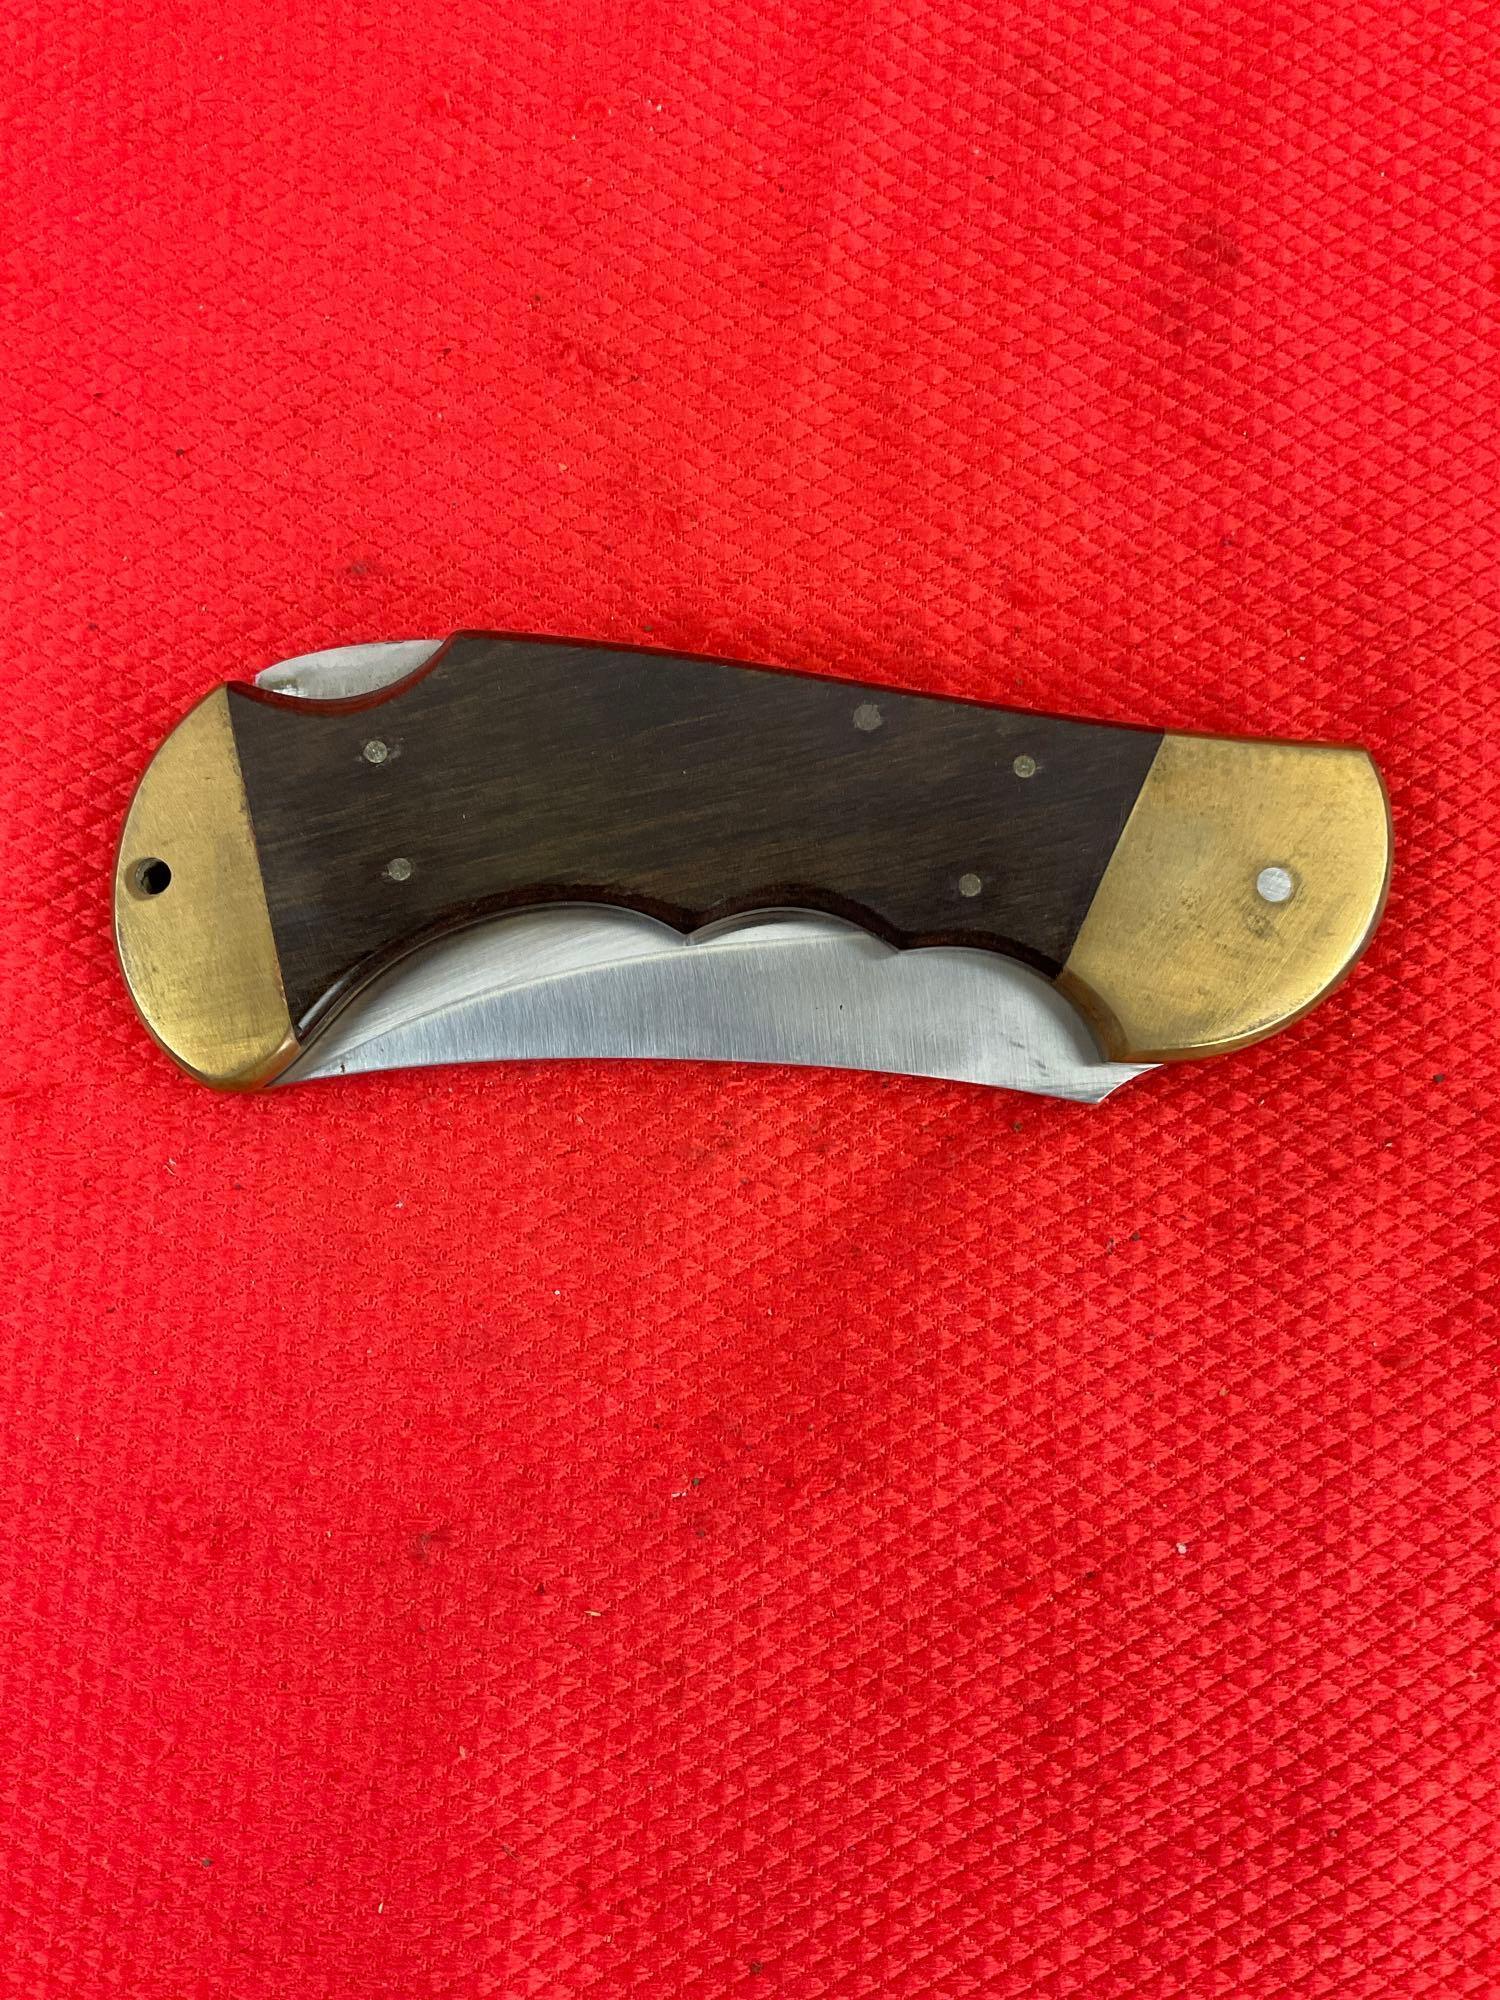 Vintage Bear Hunter 3.5" Solingen 440 Stainless Steel Folding Blade Hunting Knife w/ Sheath. See